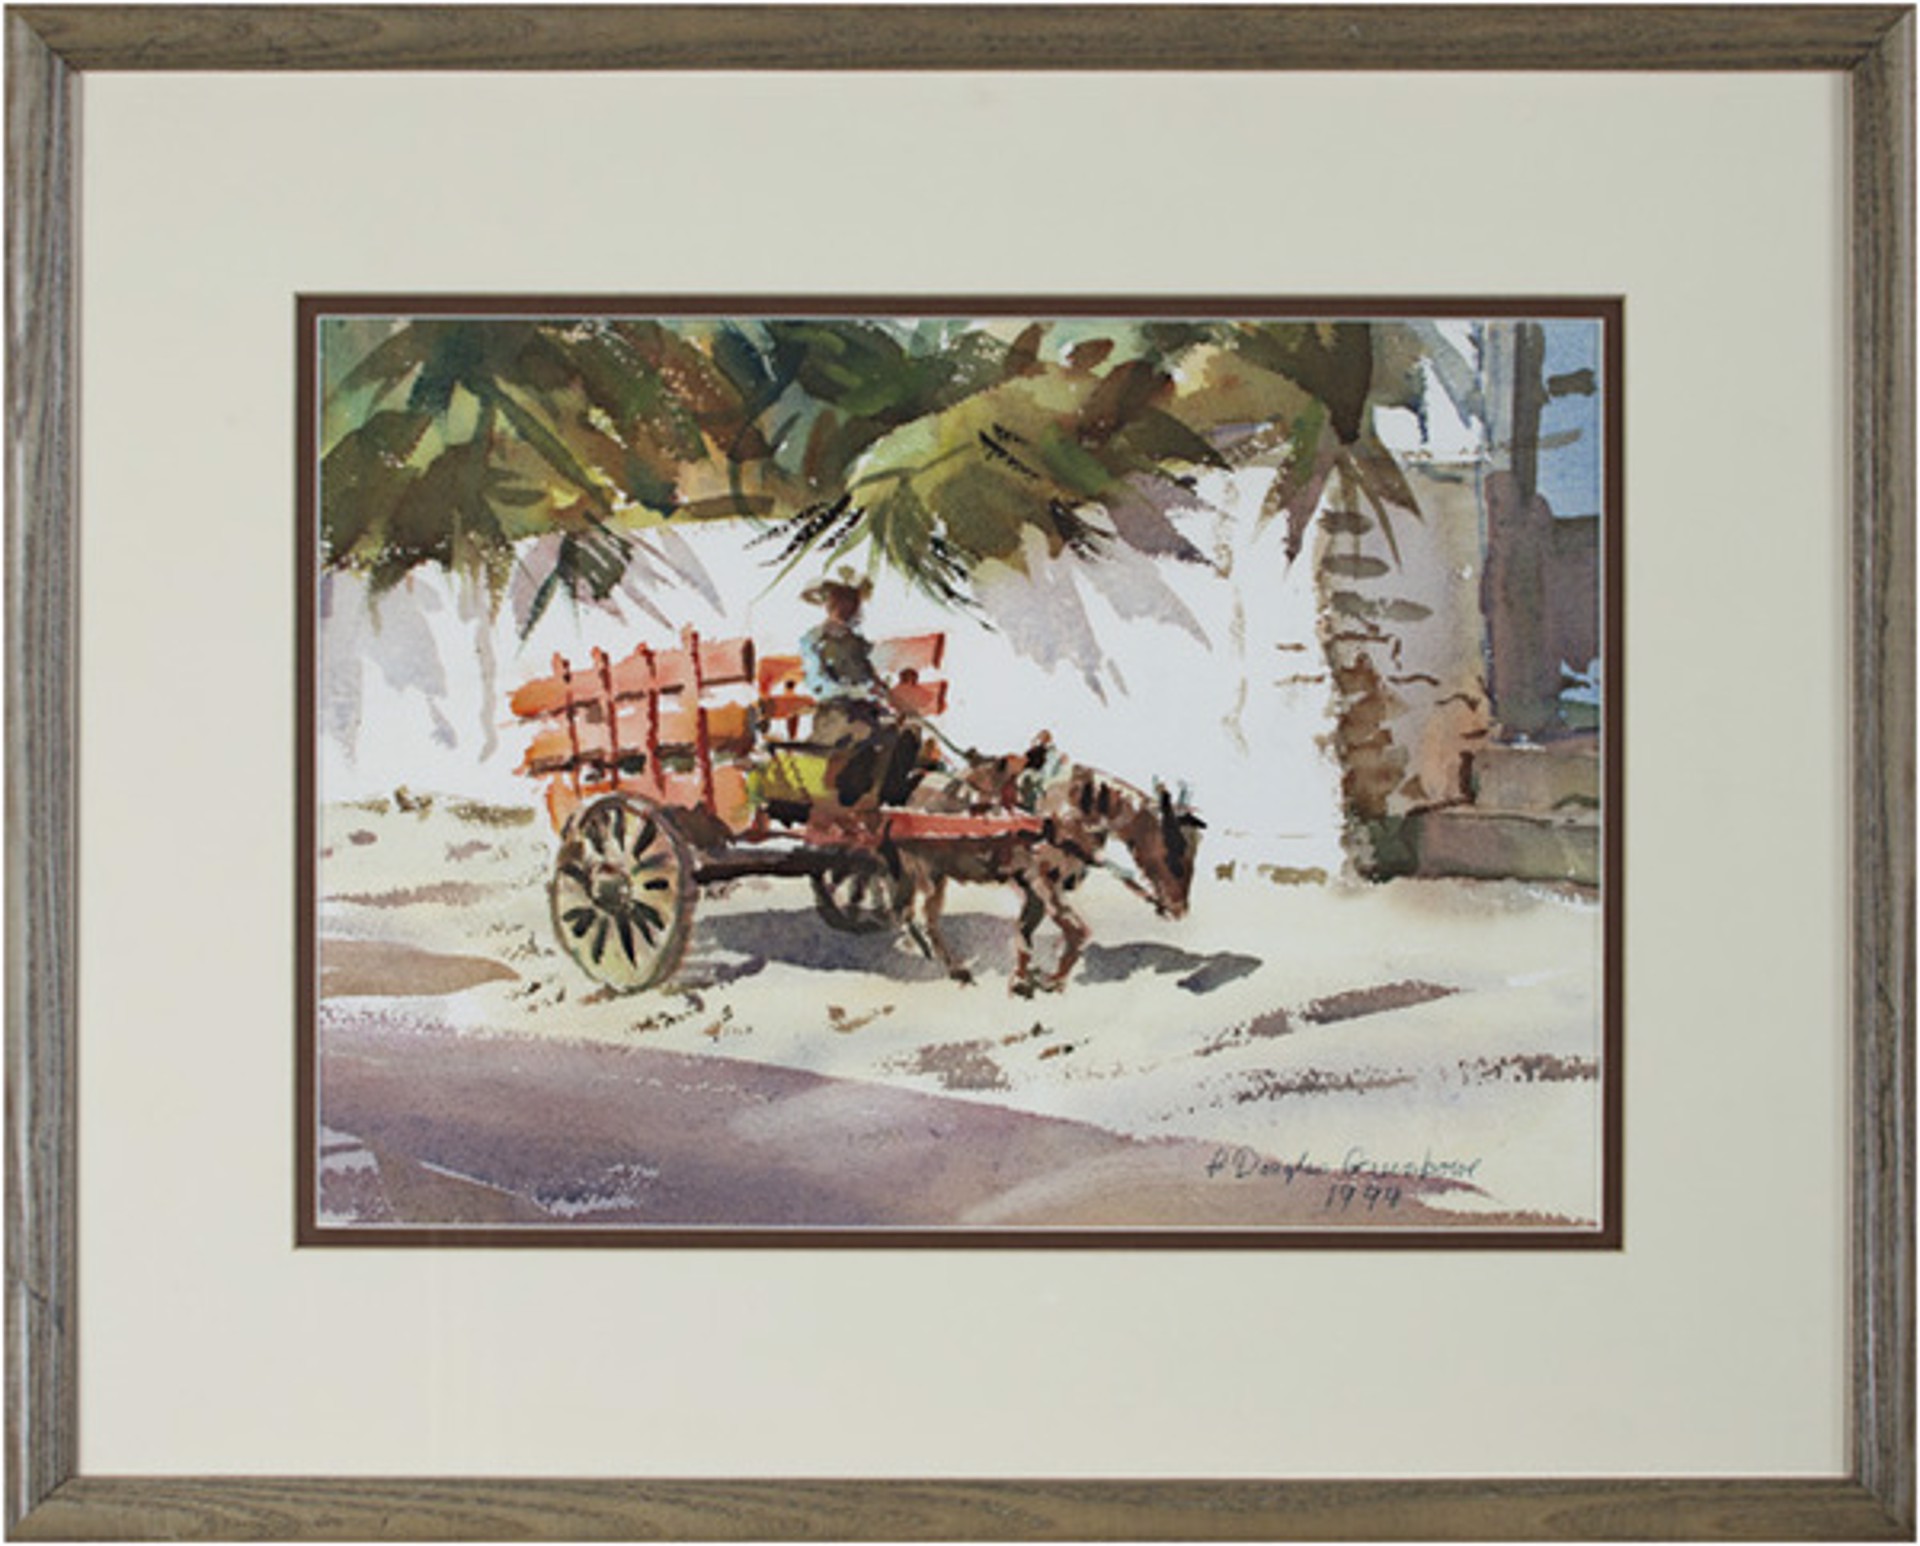 The Orange Cart, Mazatlan, Mexico by F.Douglas Greenbowe